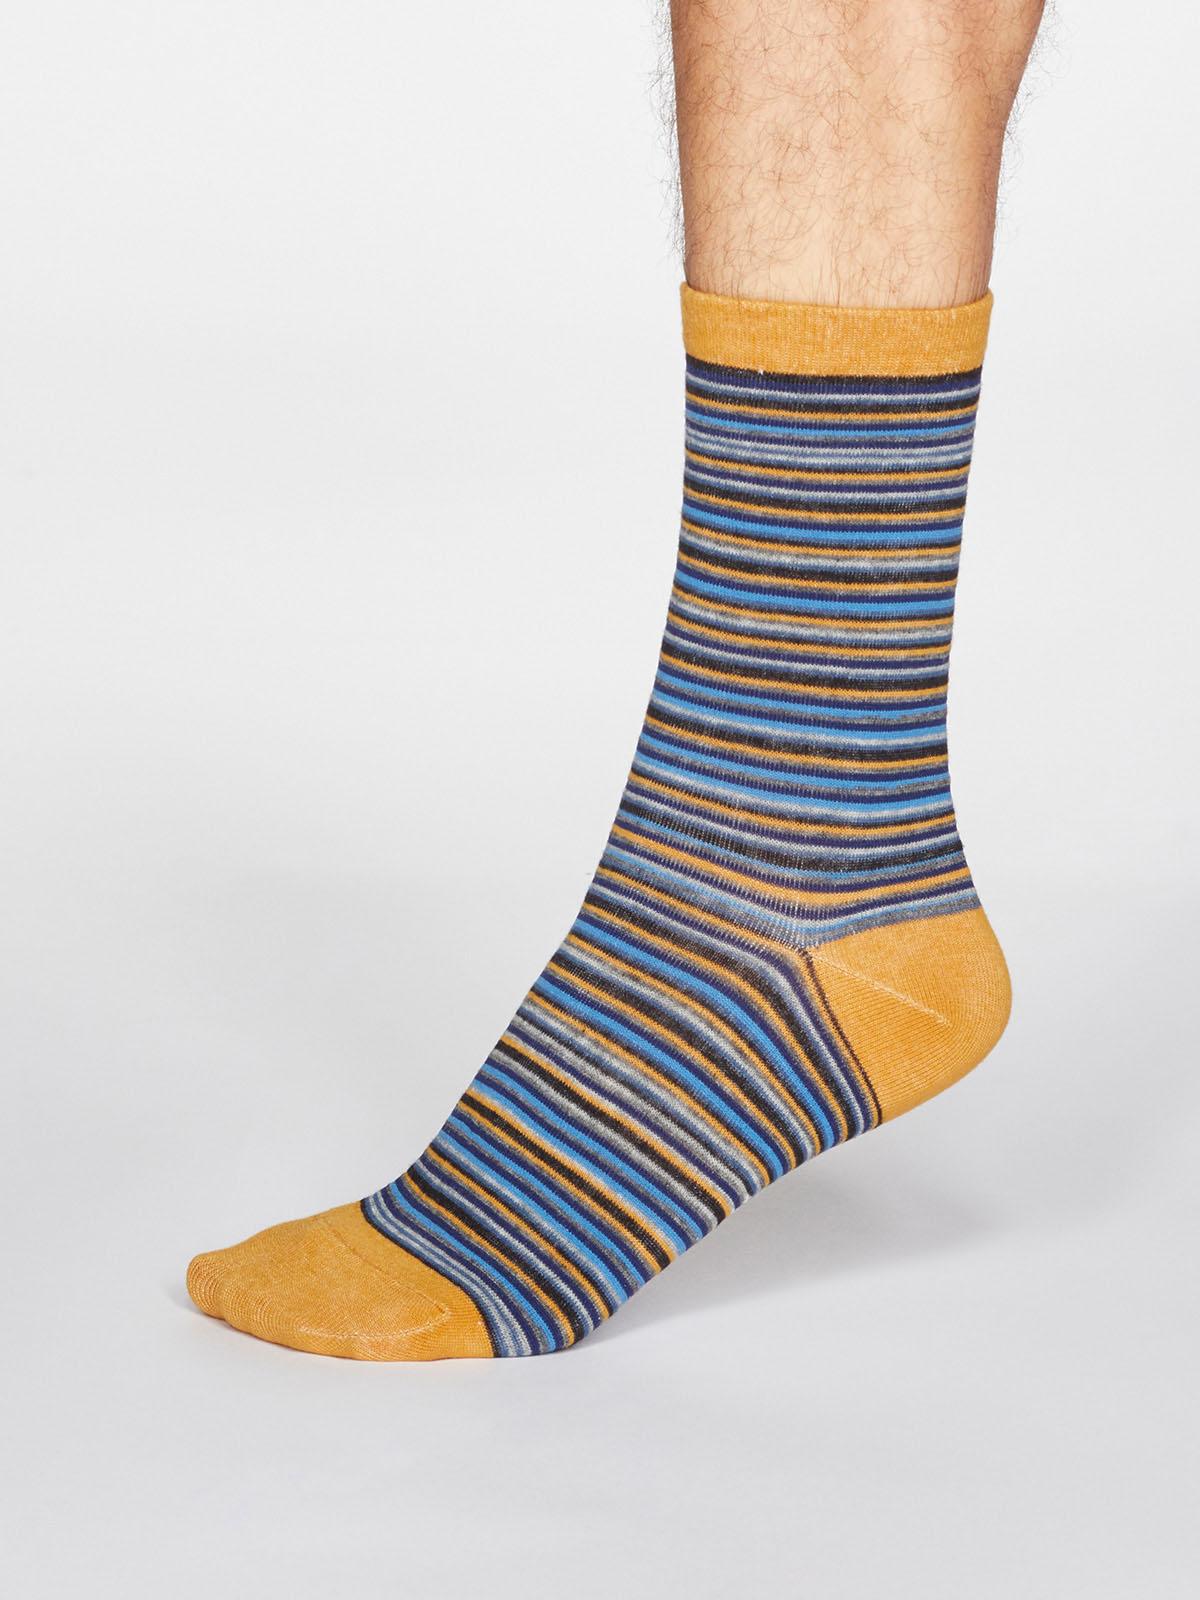 Jacob Stripe Socks - Mustard Yellow - Thought Clothing UK